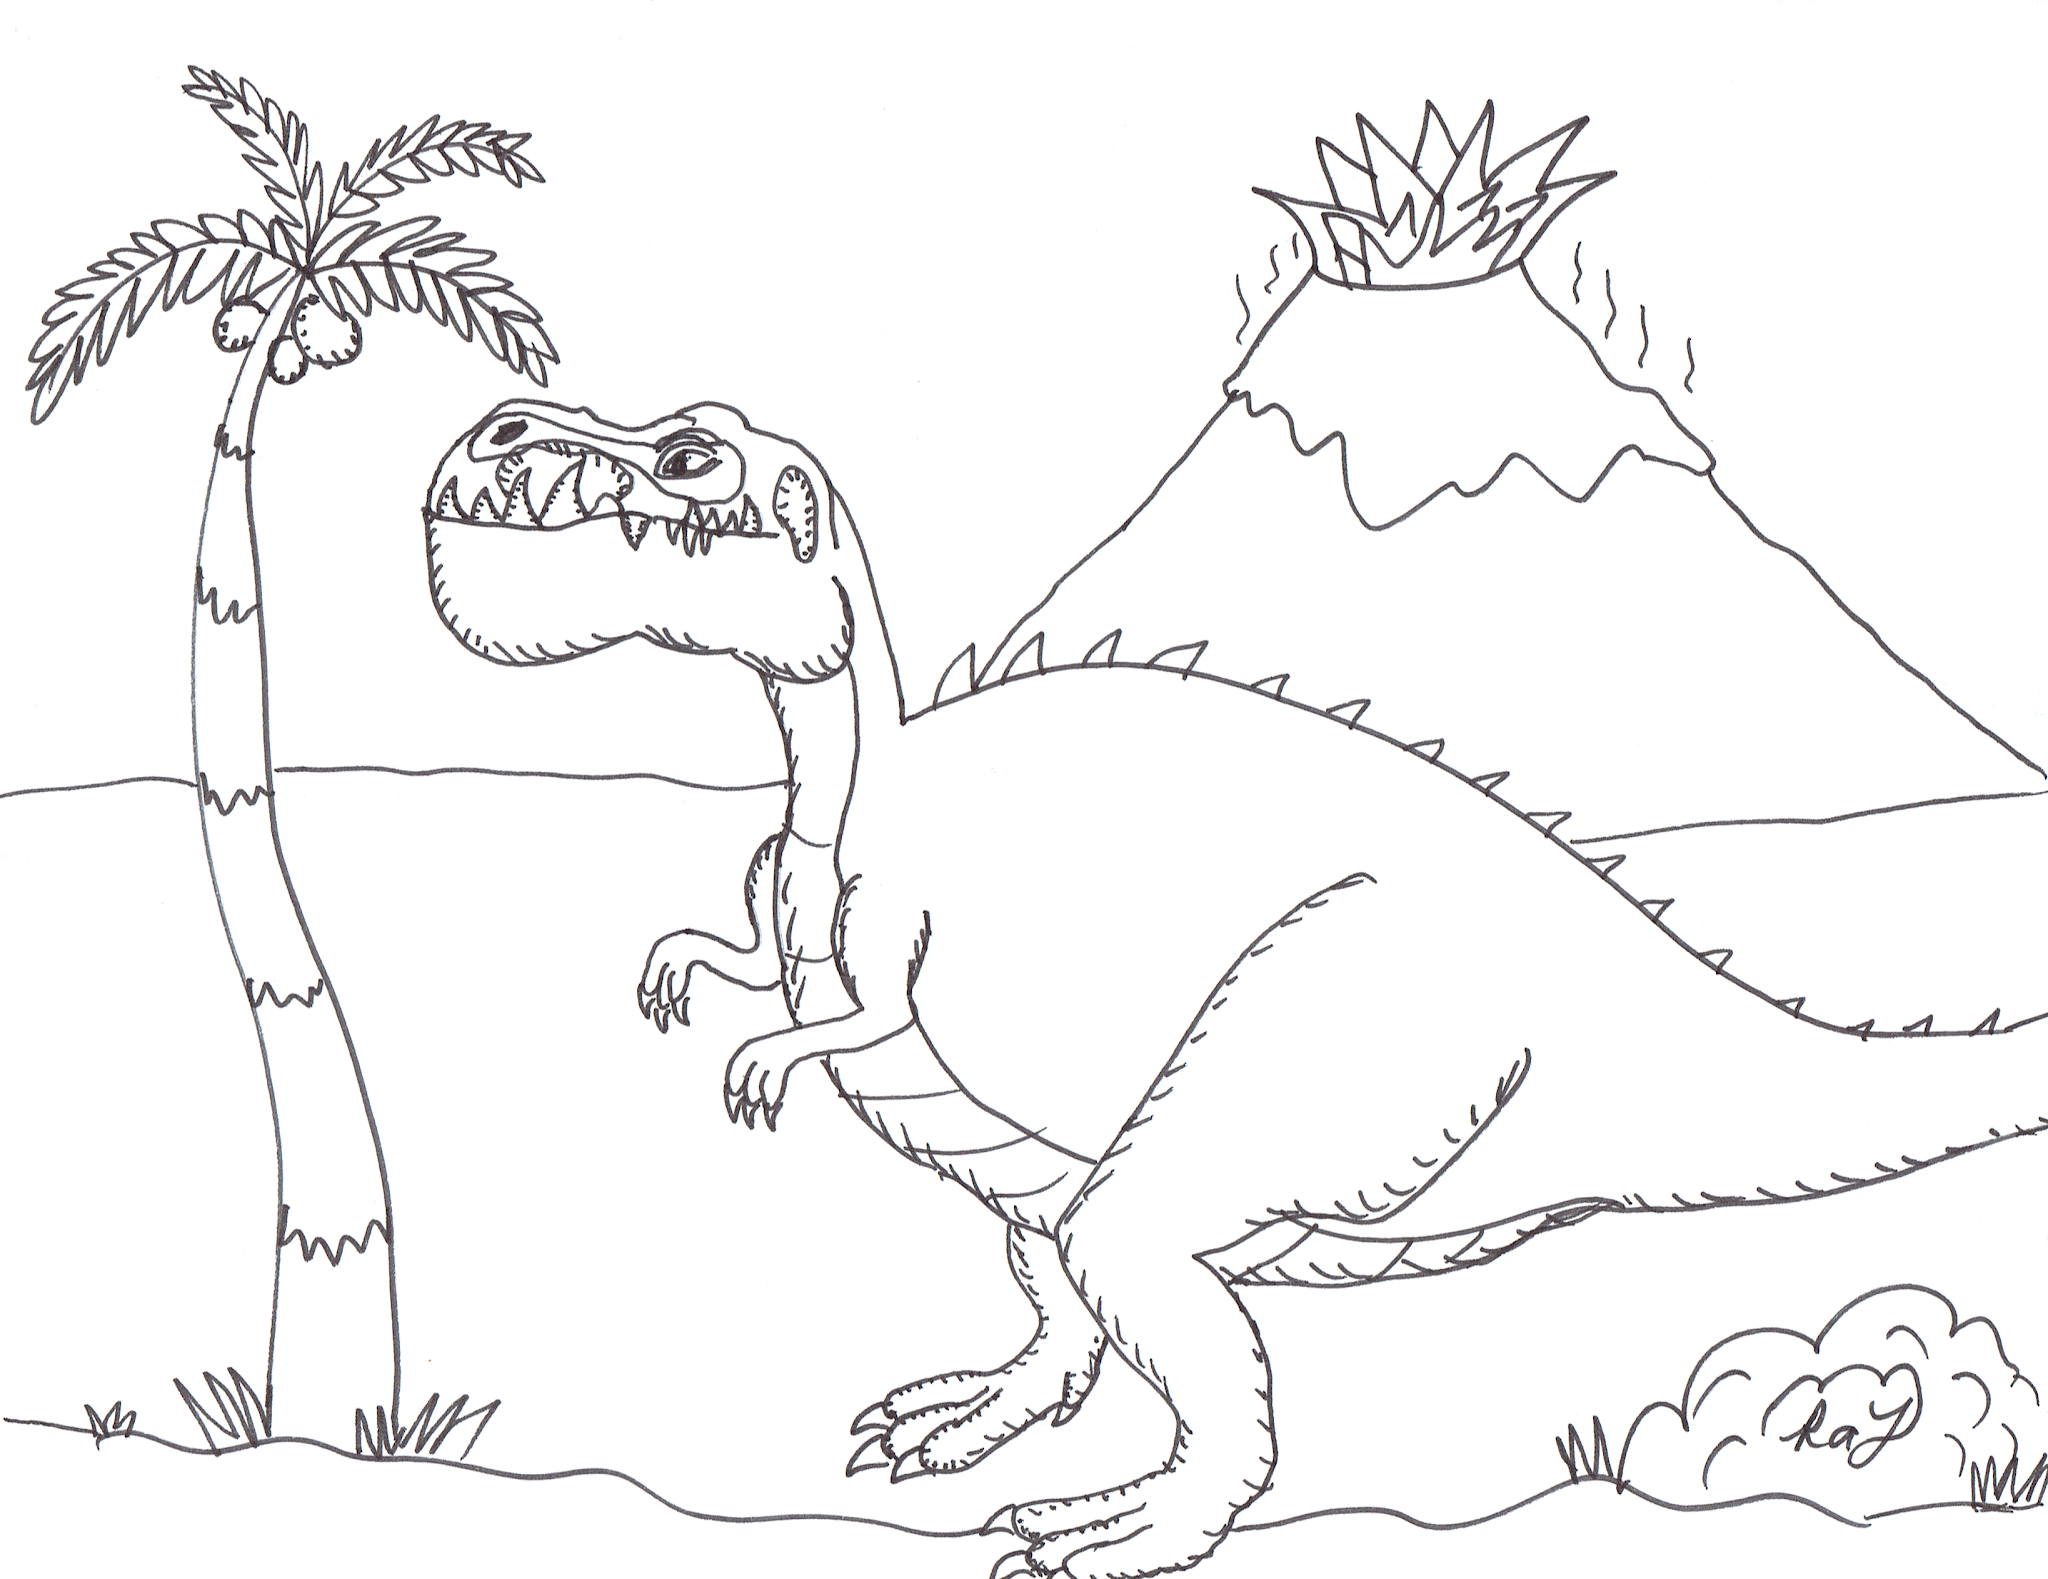 Robin's Great Coloring Pages: Gigantosaurus and Giganotosaurus (English